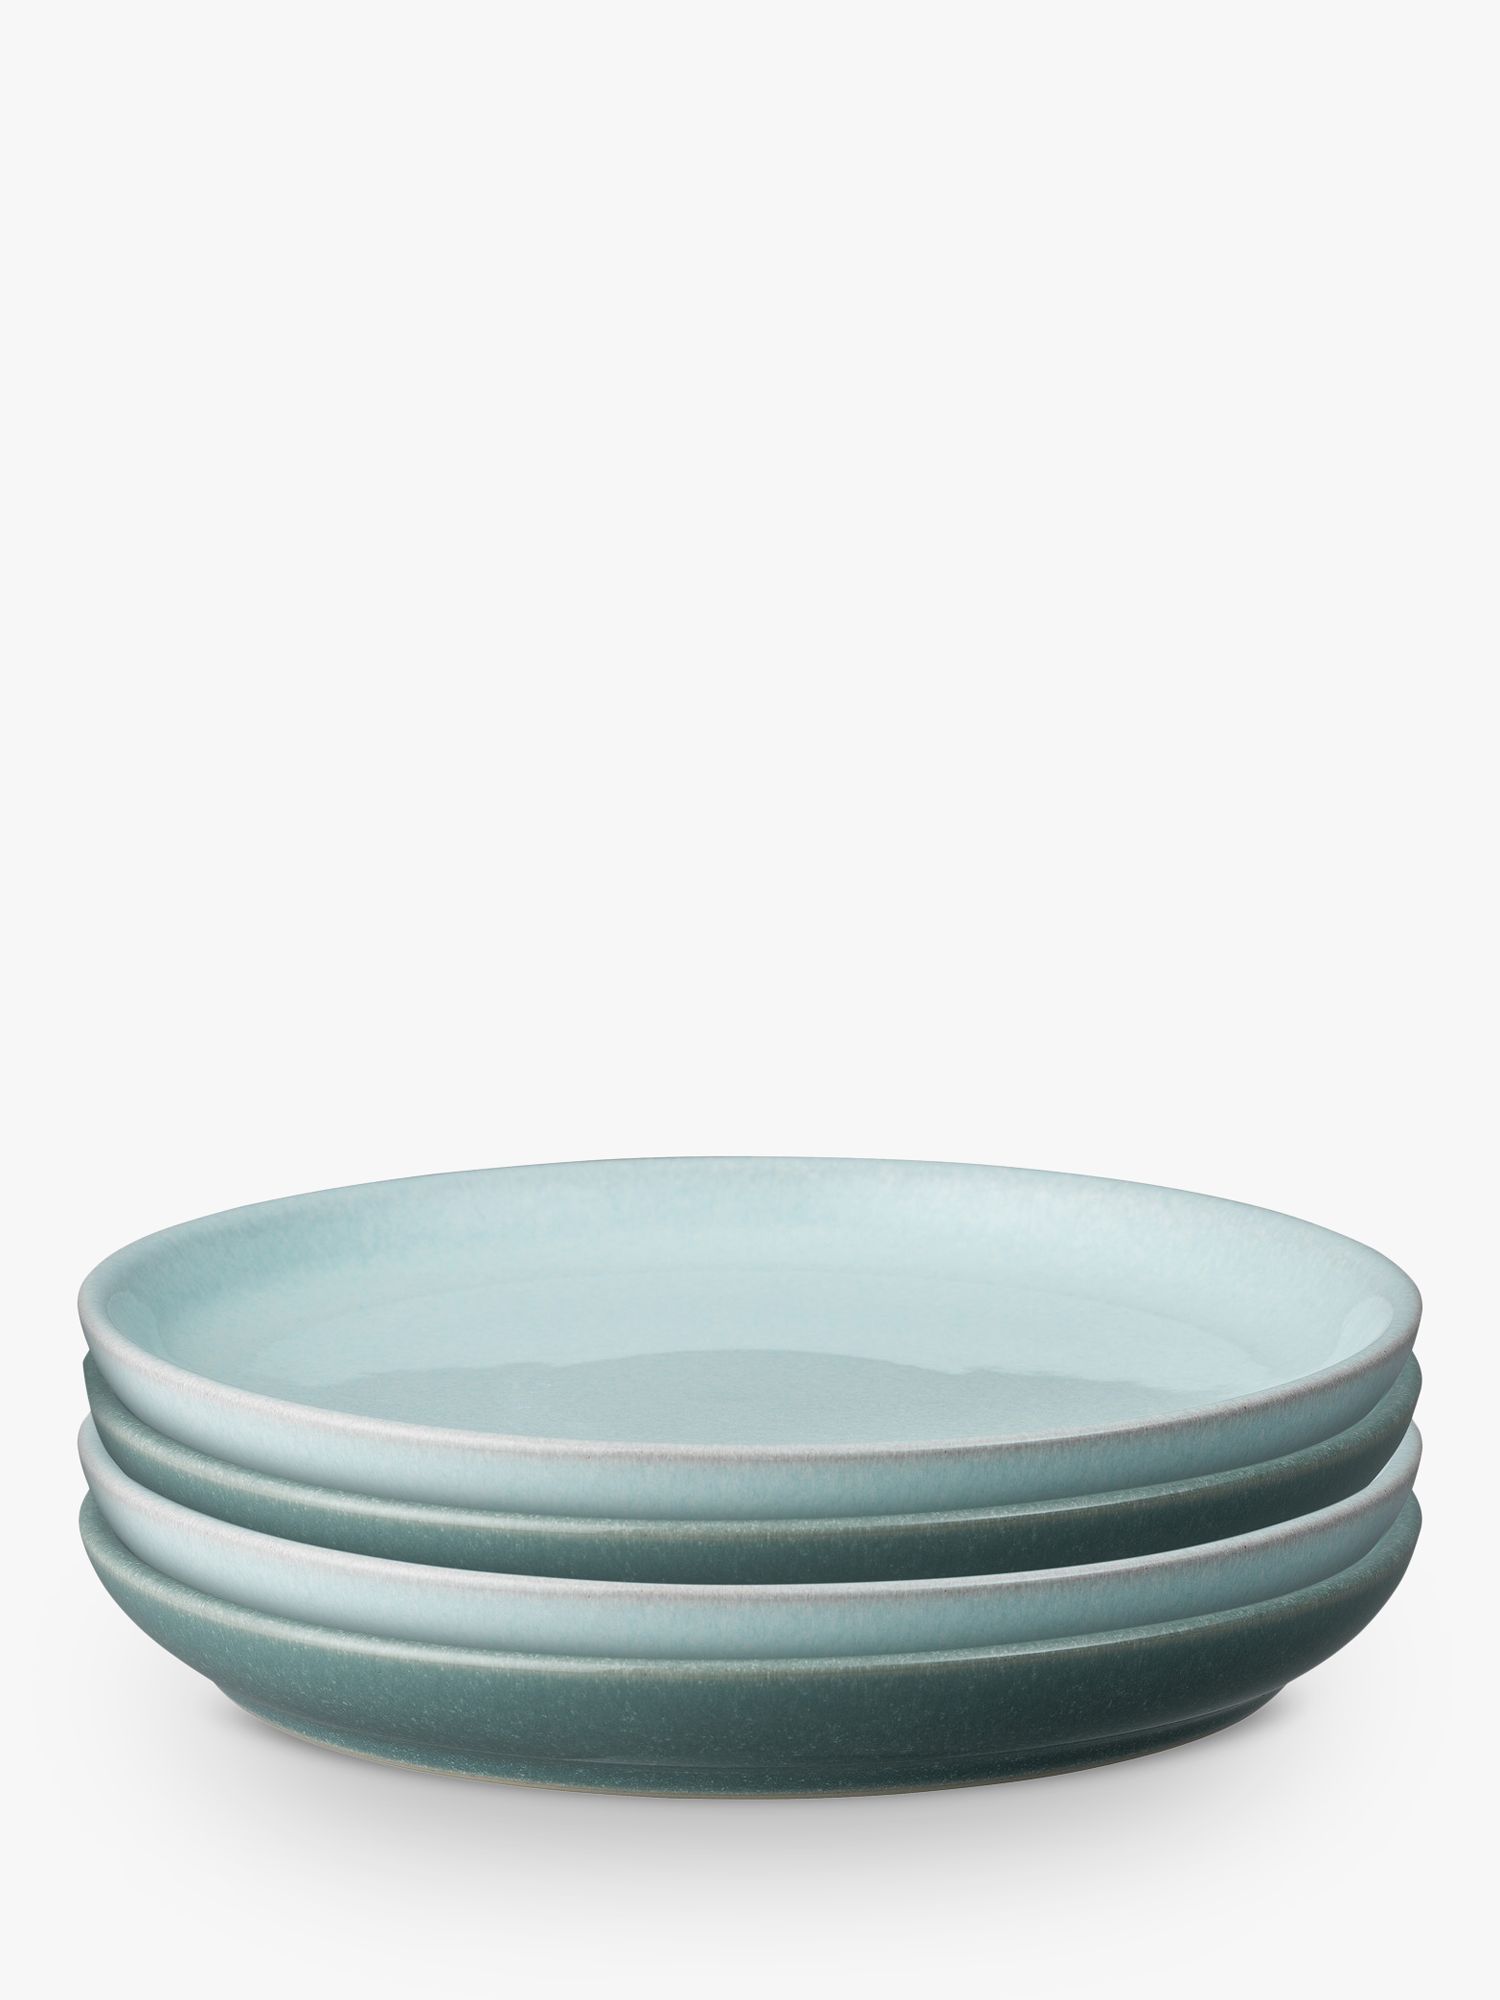 Denby Quartz Jade Stoneware Medium Plates, Set of 4, 21cm, Green